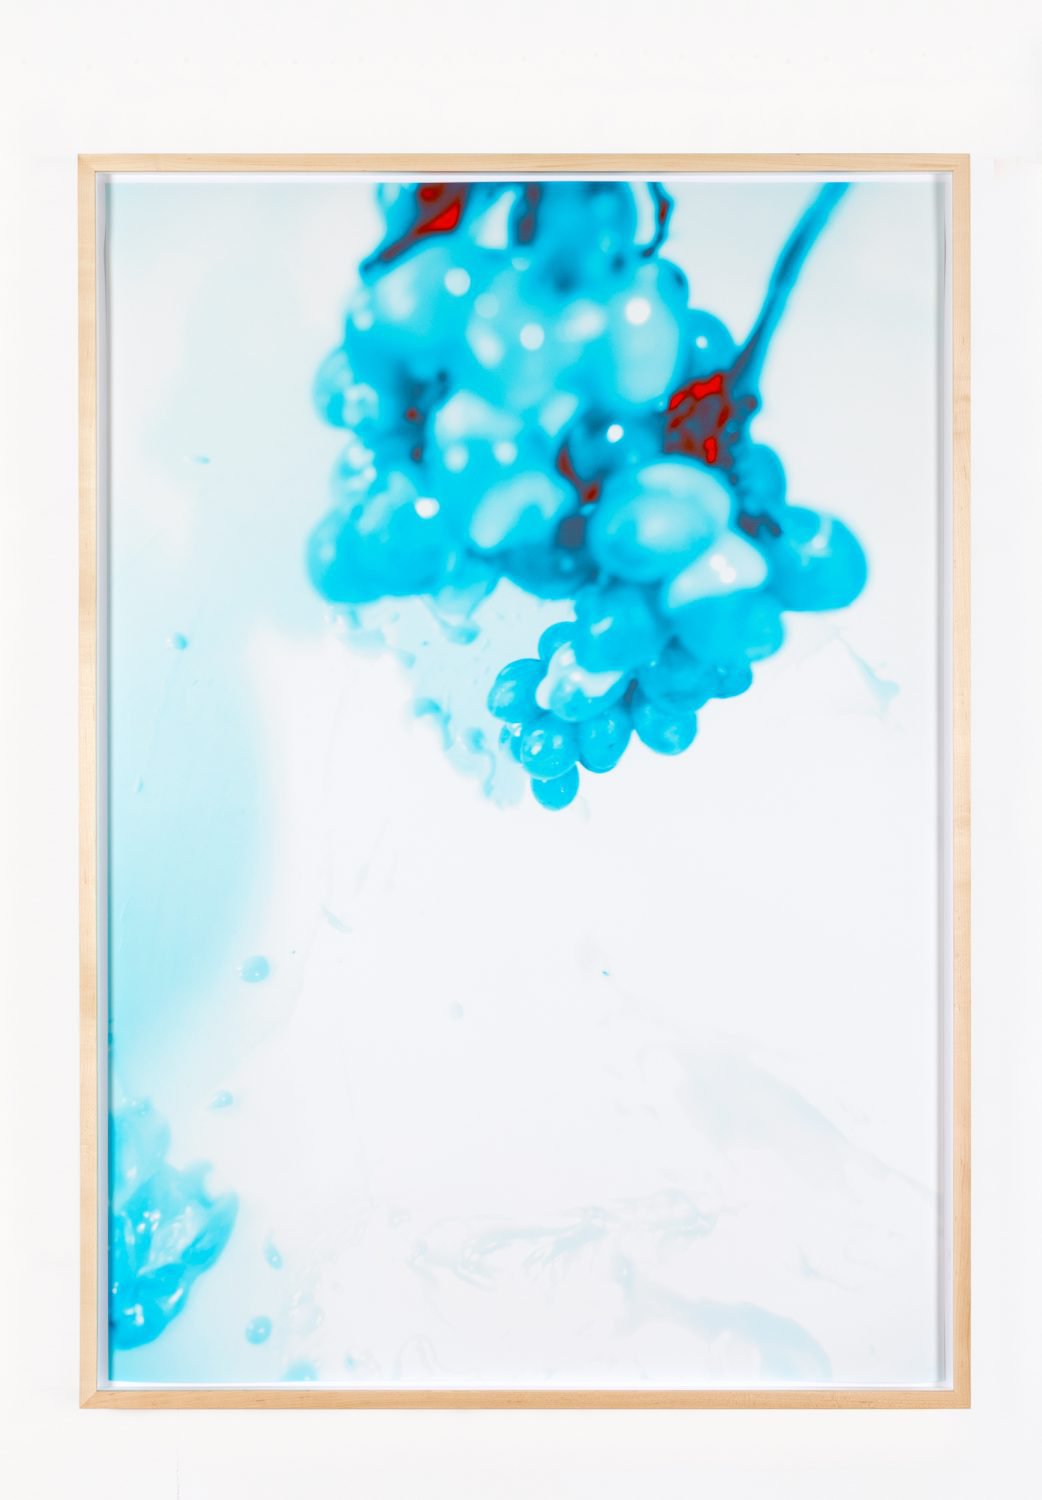 Lisa Holzer Trauben, 2019Pigment print on cotton paper110.3 x 78 cm